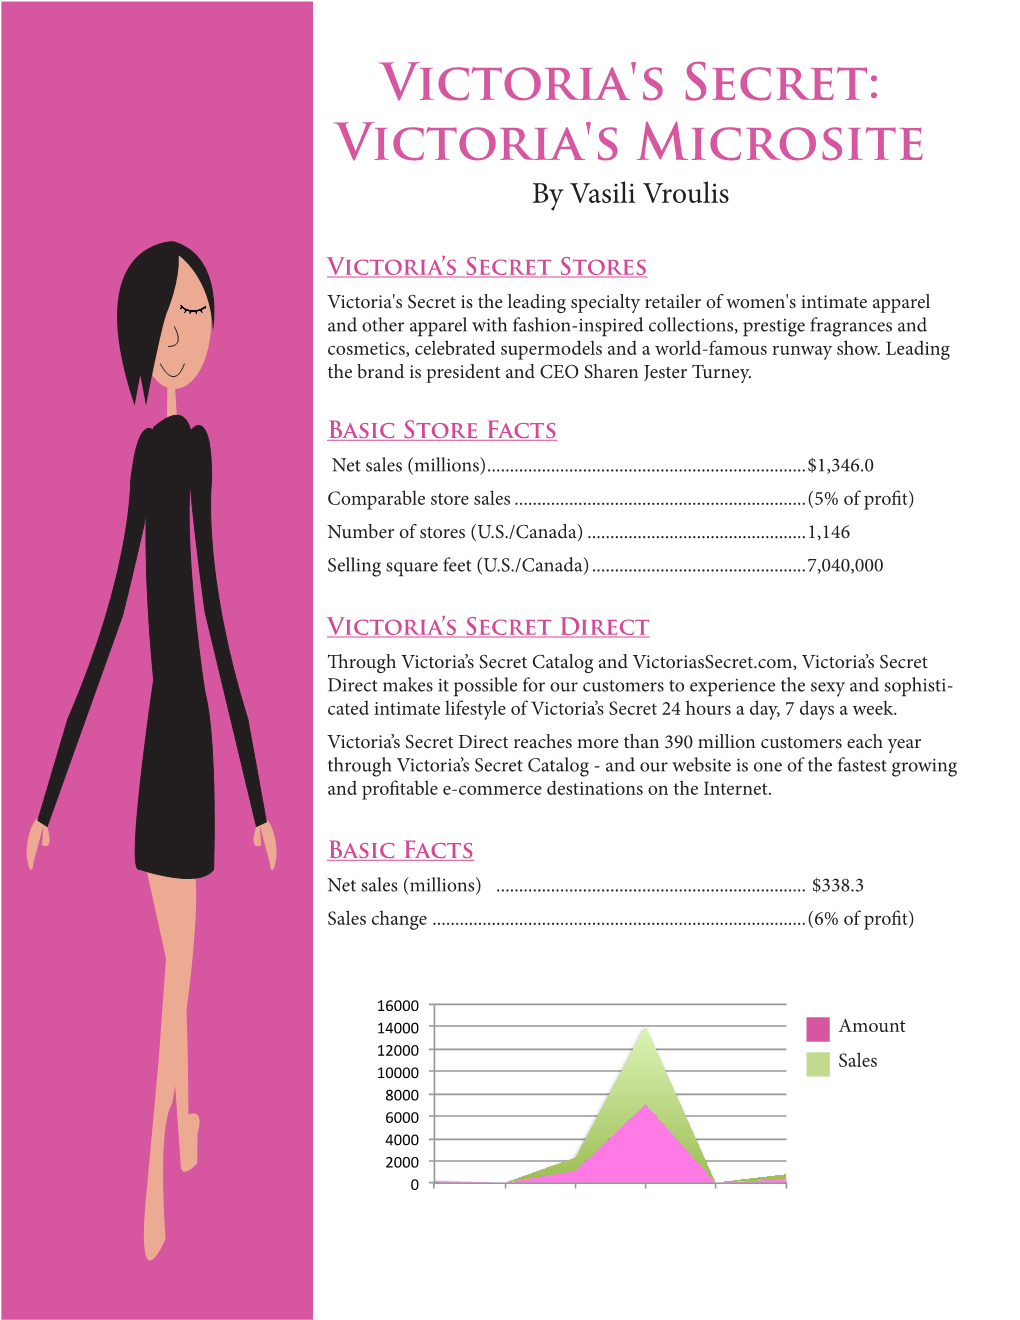 Victoria's Secret: Victoria's Microsite by Vasili Vroulis